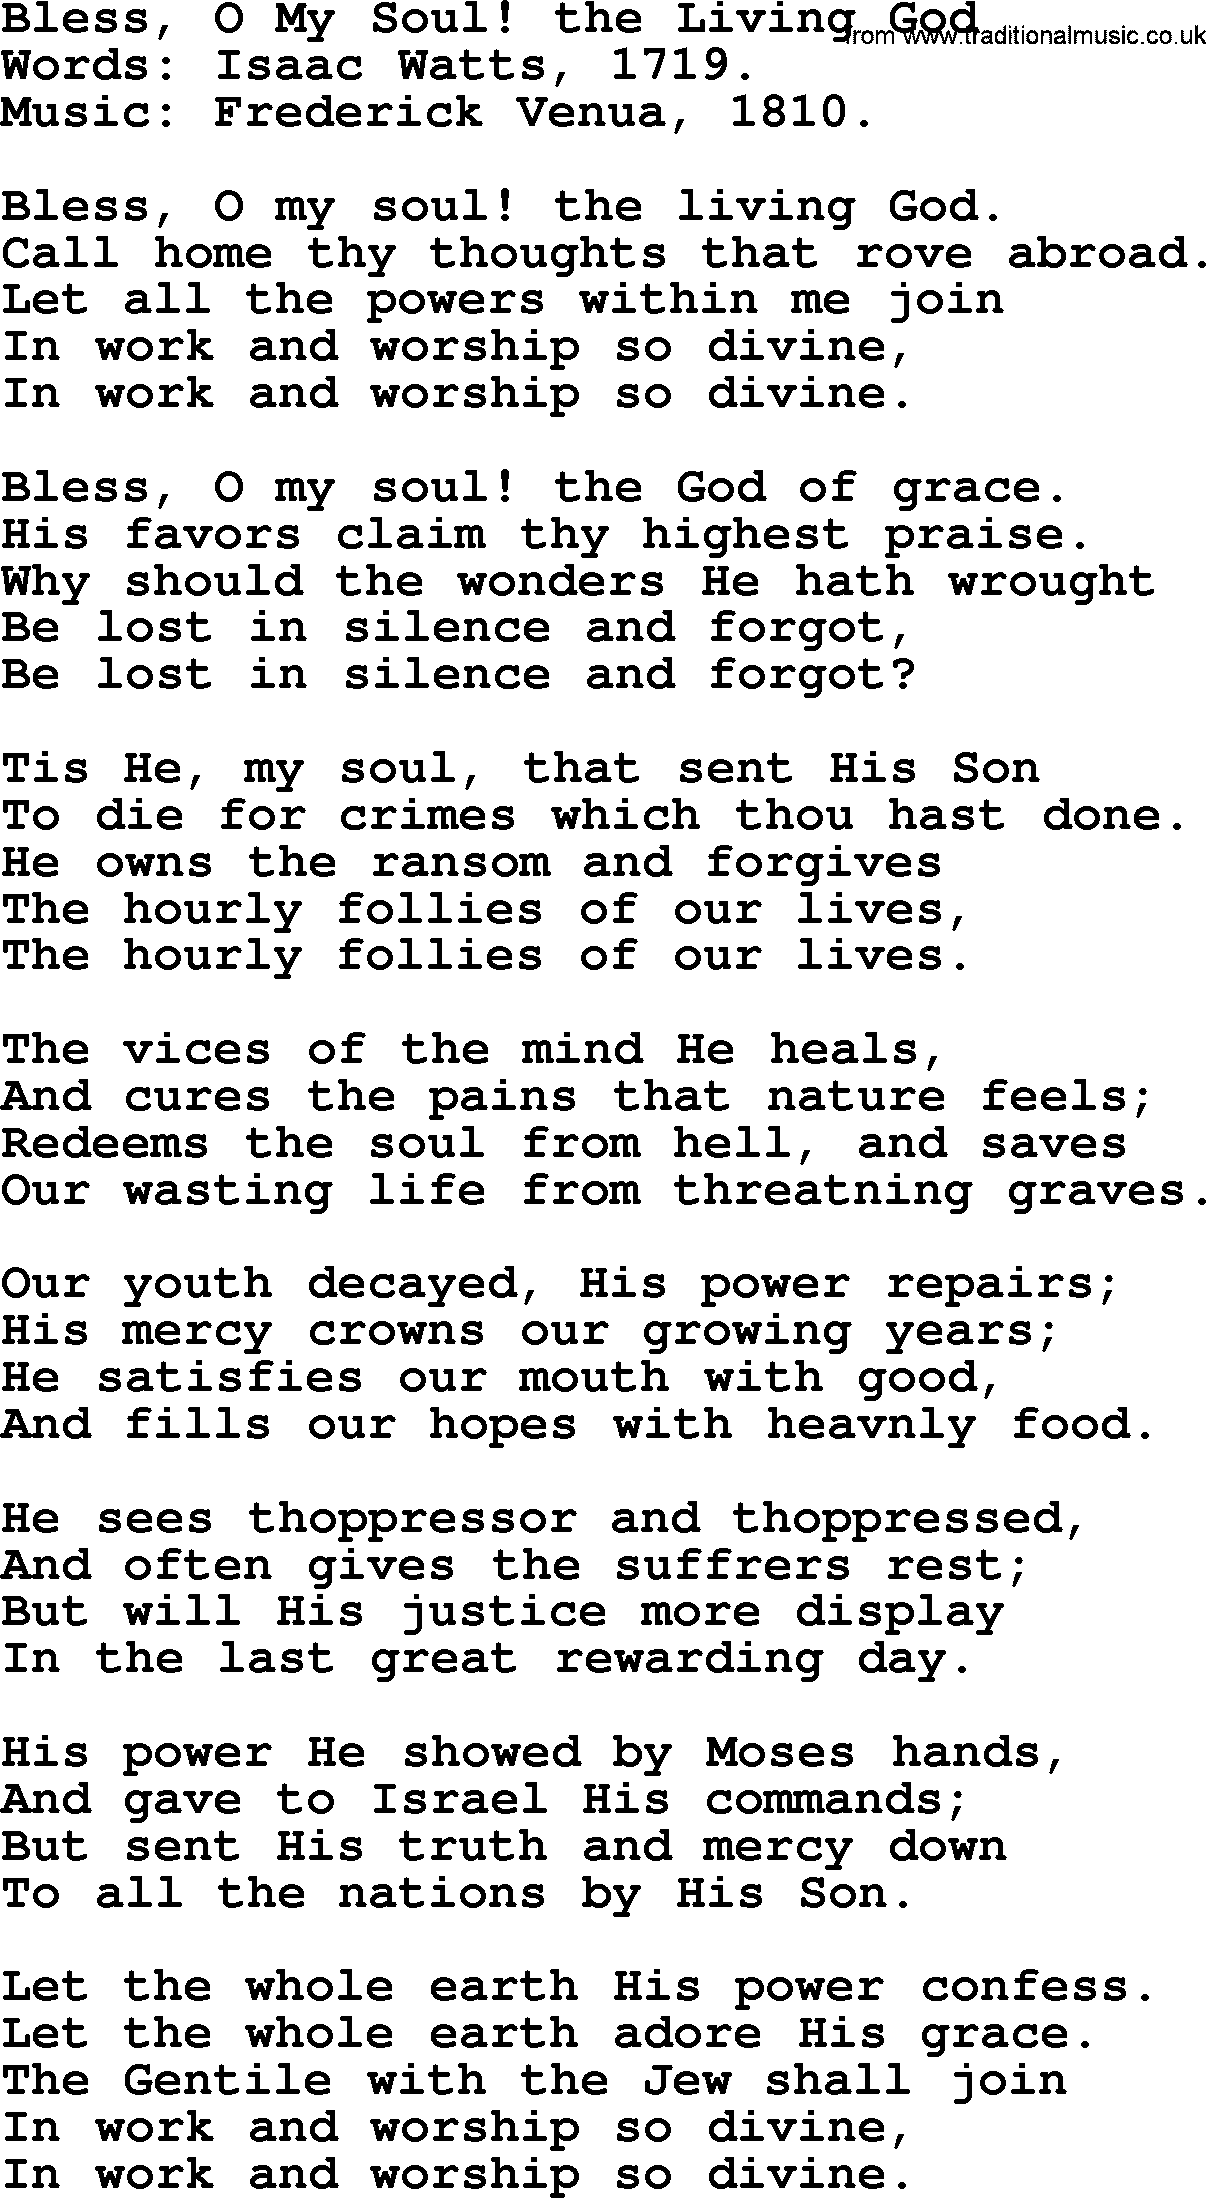 Isaac Watts Christian hymn: Bless, O My Soul! the Living God- lyricss